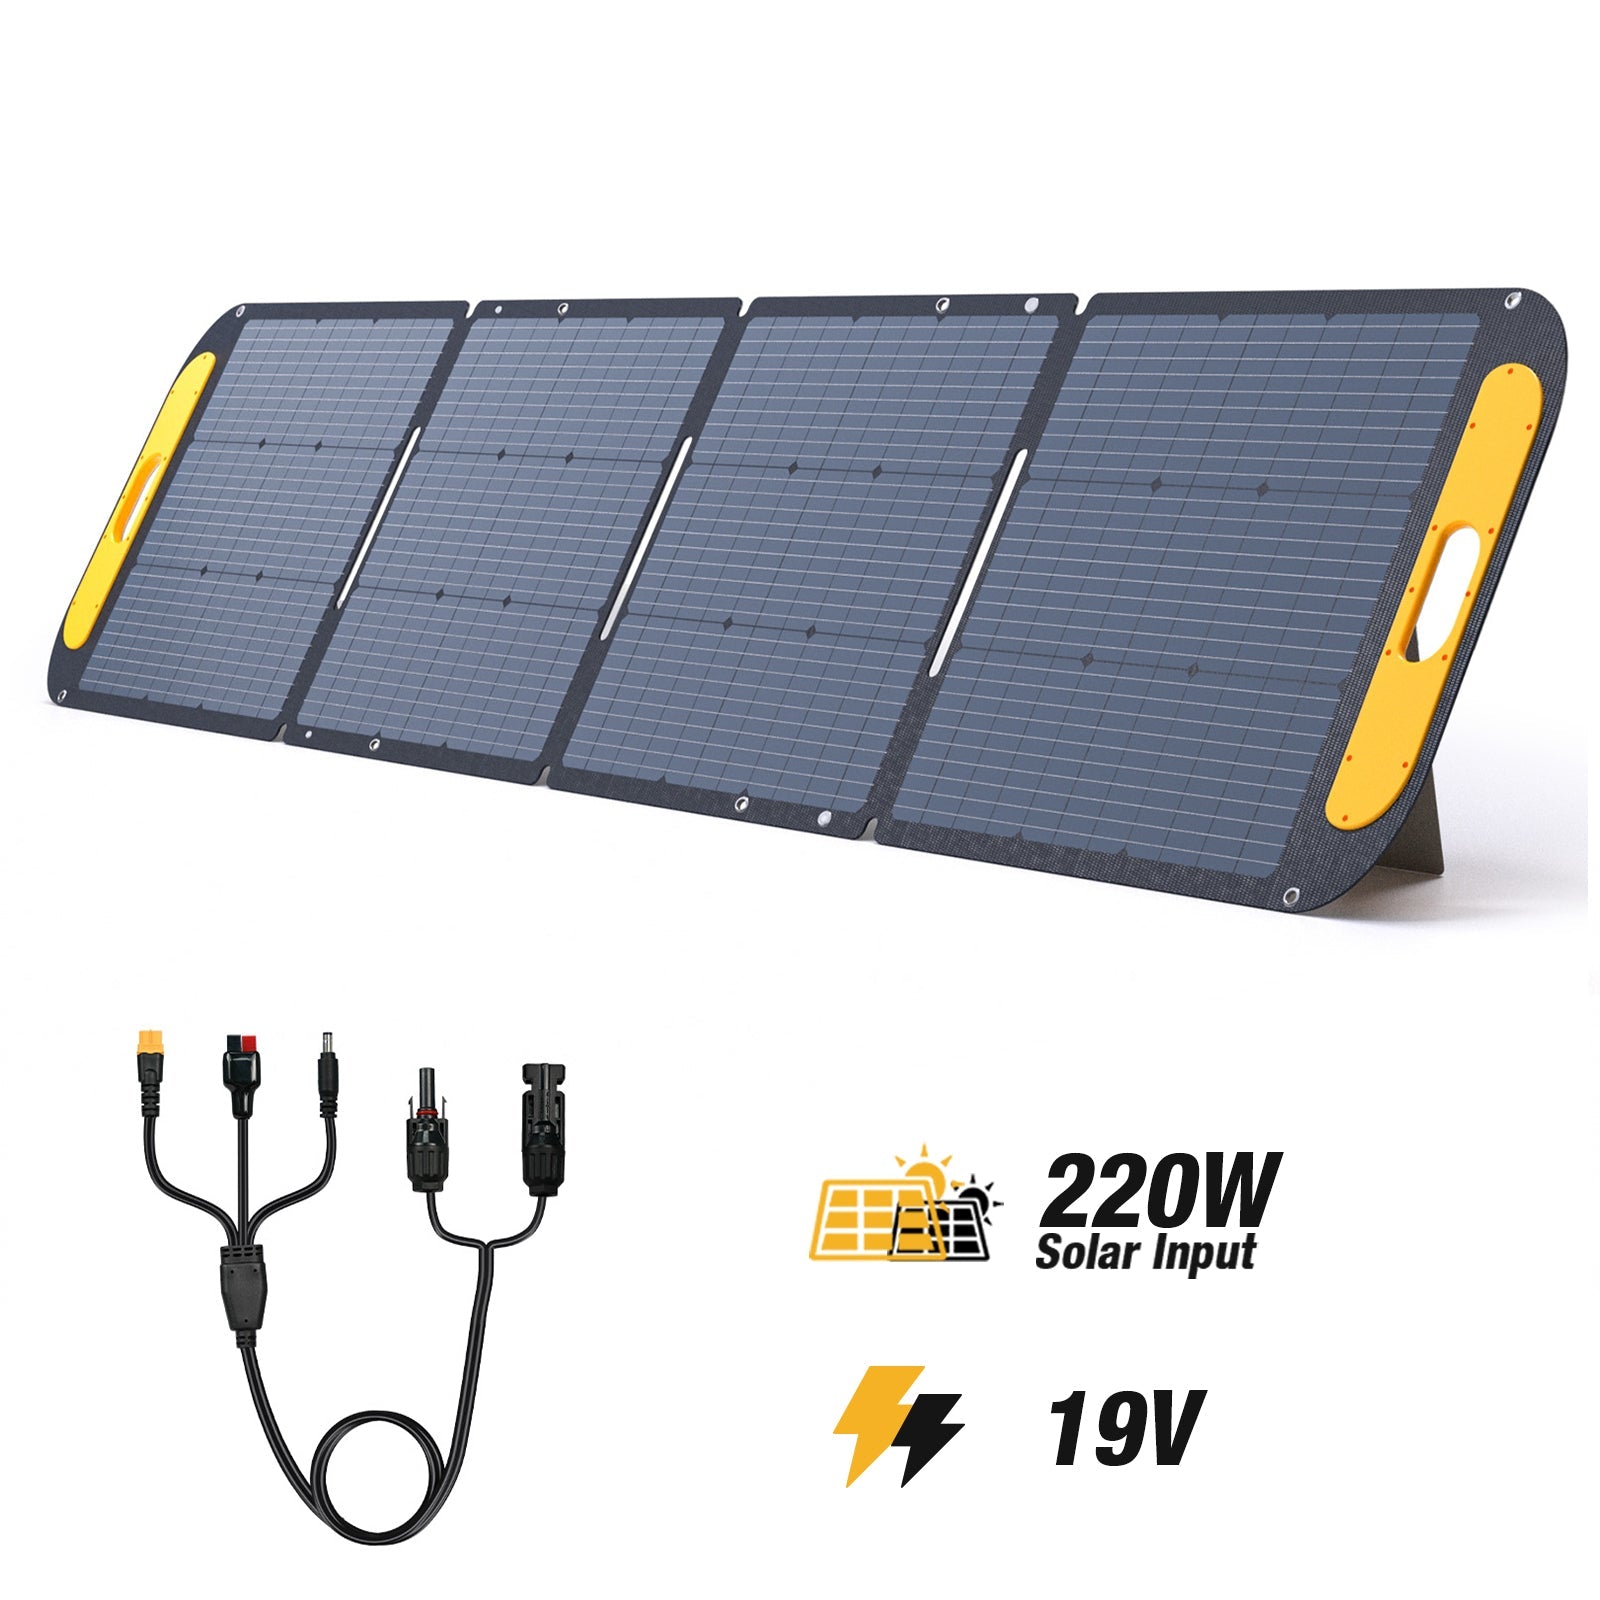 Jump 1500W/ 828Wh 220W Solar Generator